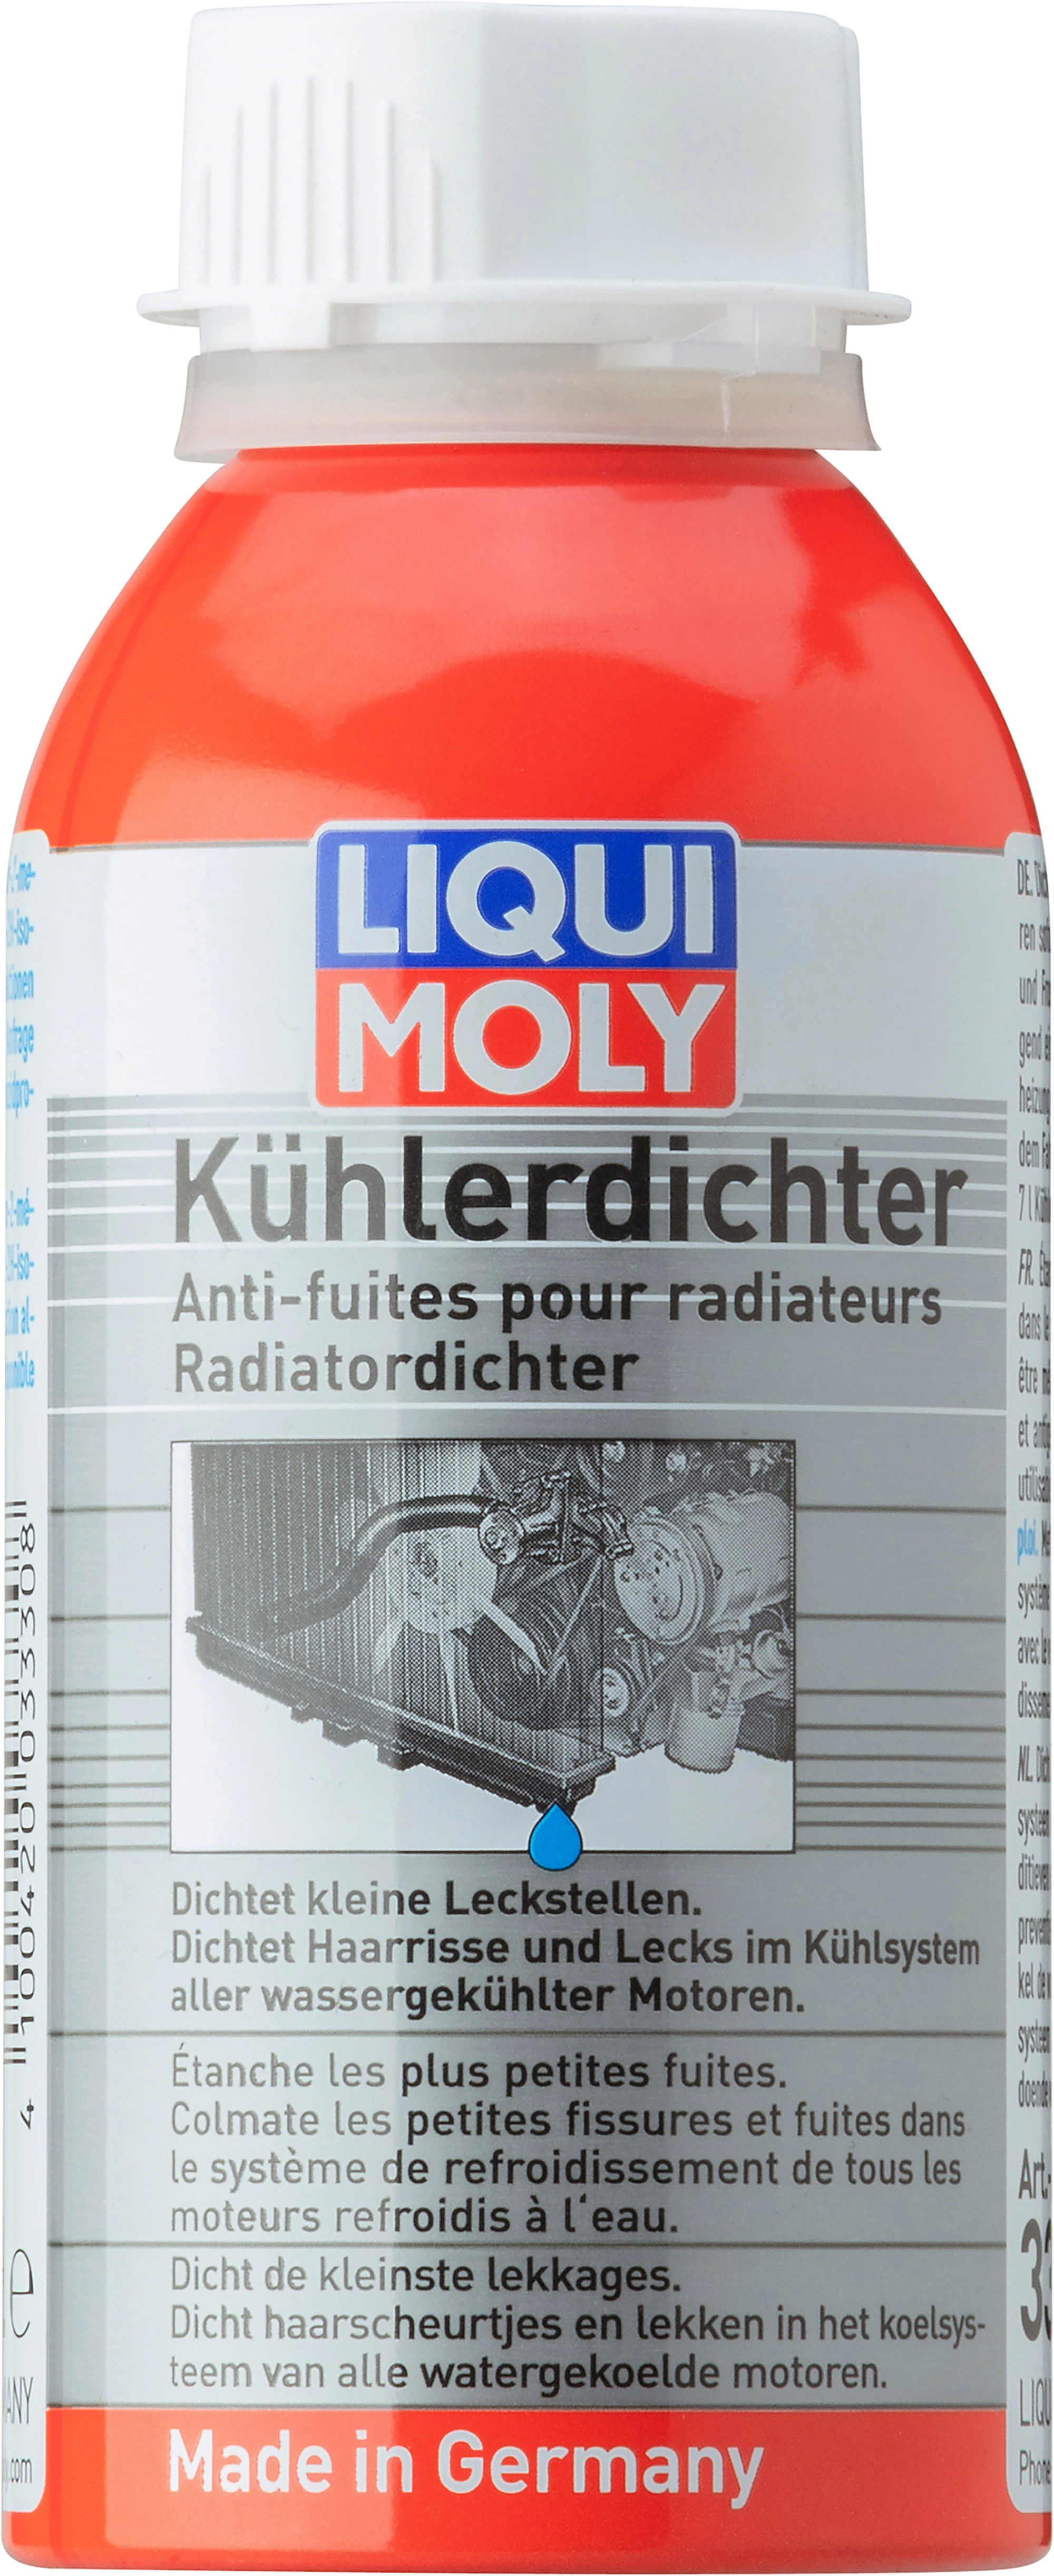 LIQUI MOLY Kühlerdichter Kühler-Dichtmittel-Additiv Dichtungsmittel 150 ml  3330 